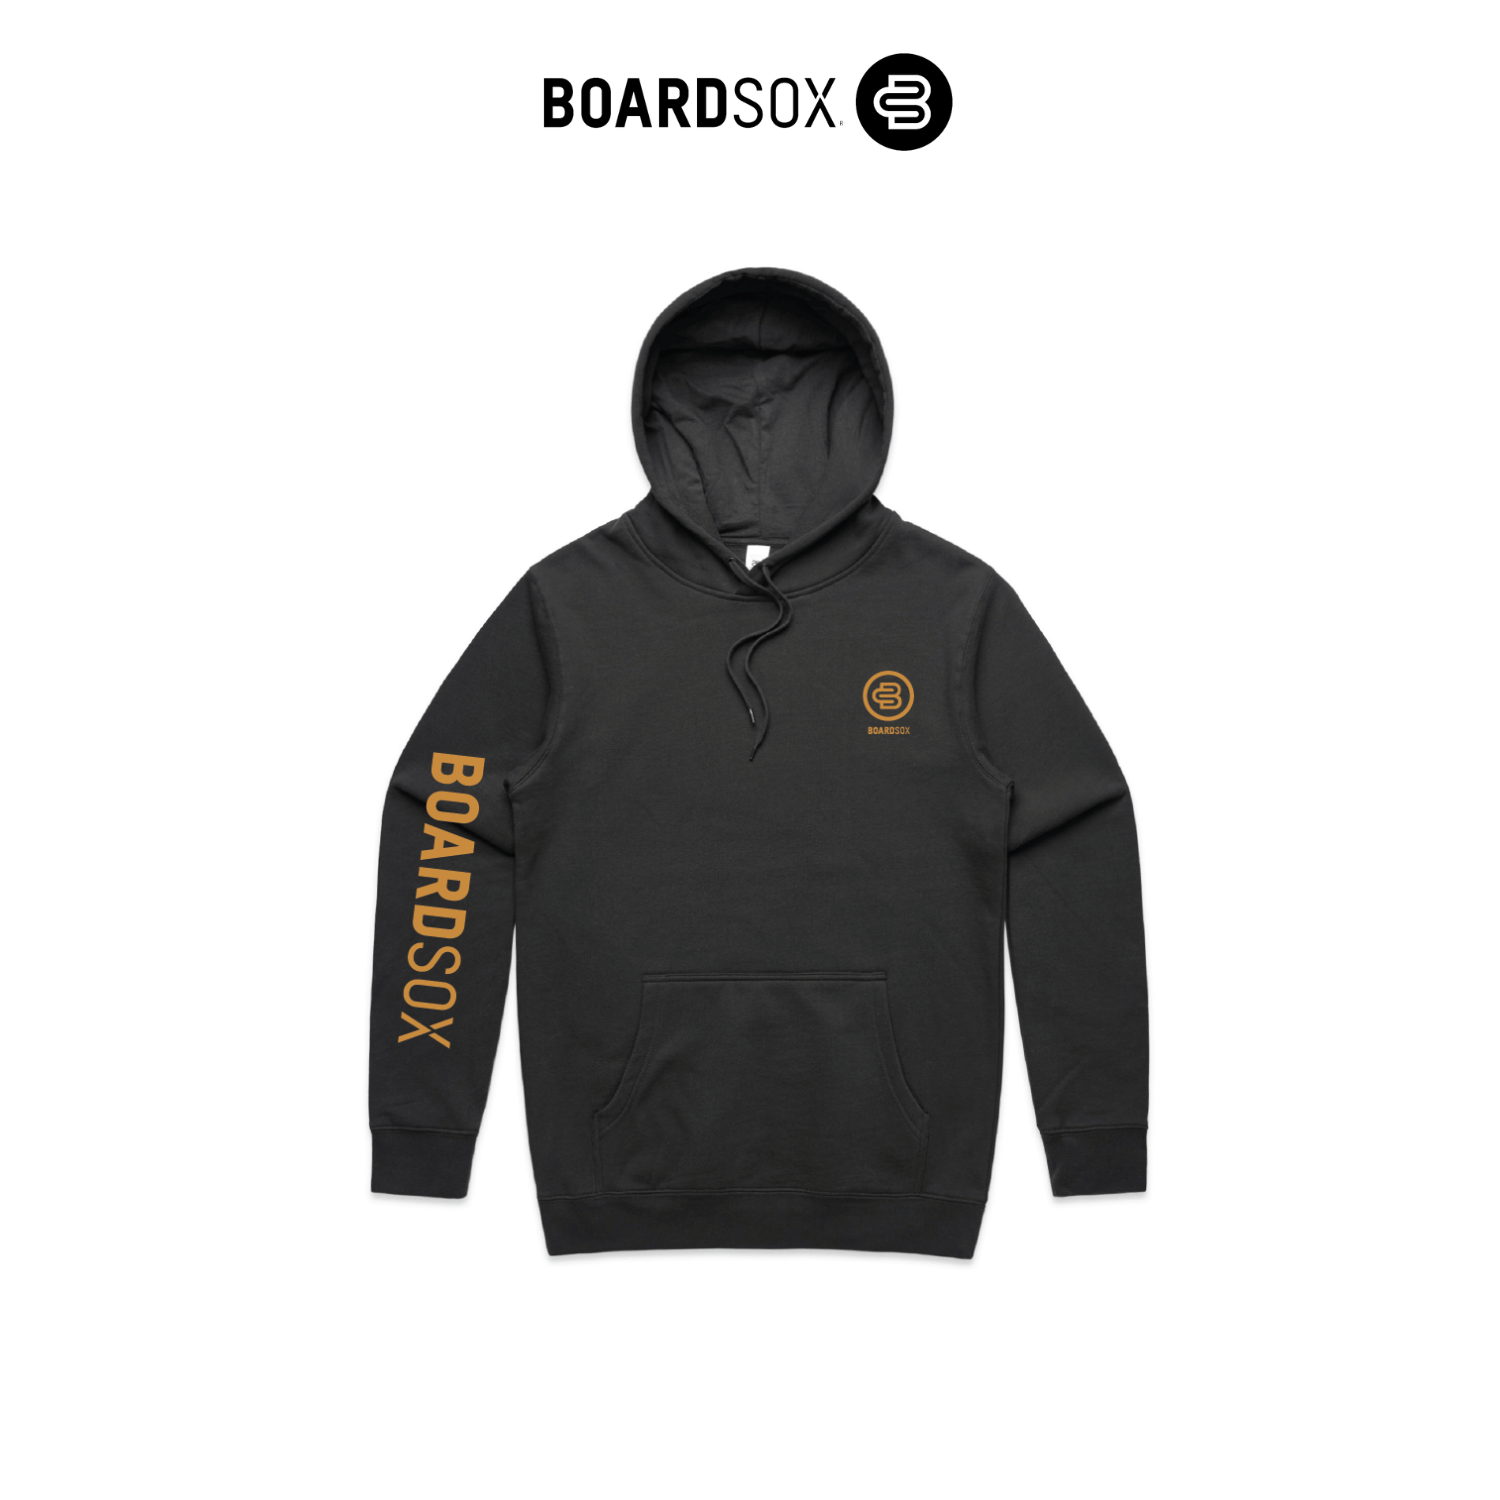 Boardsox Hoodie - Charcoal ♻️ - BOARDSOX® AustraliaClothing